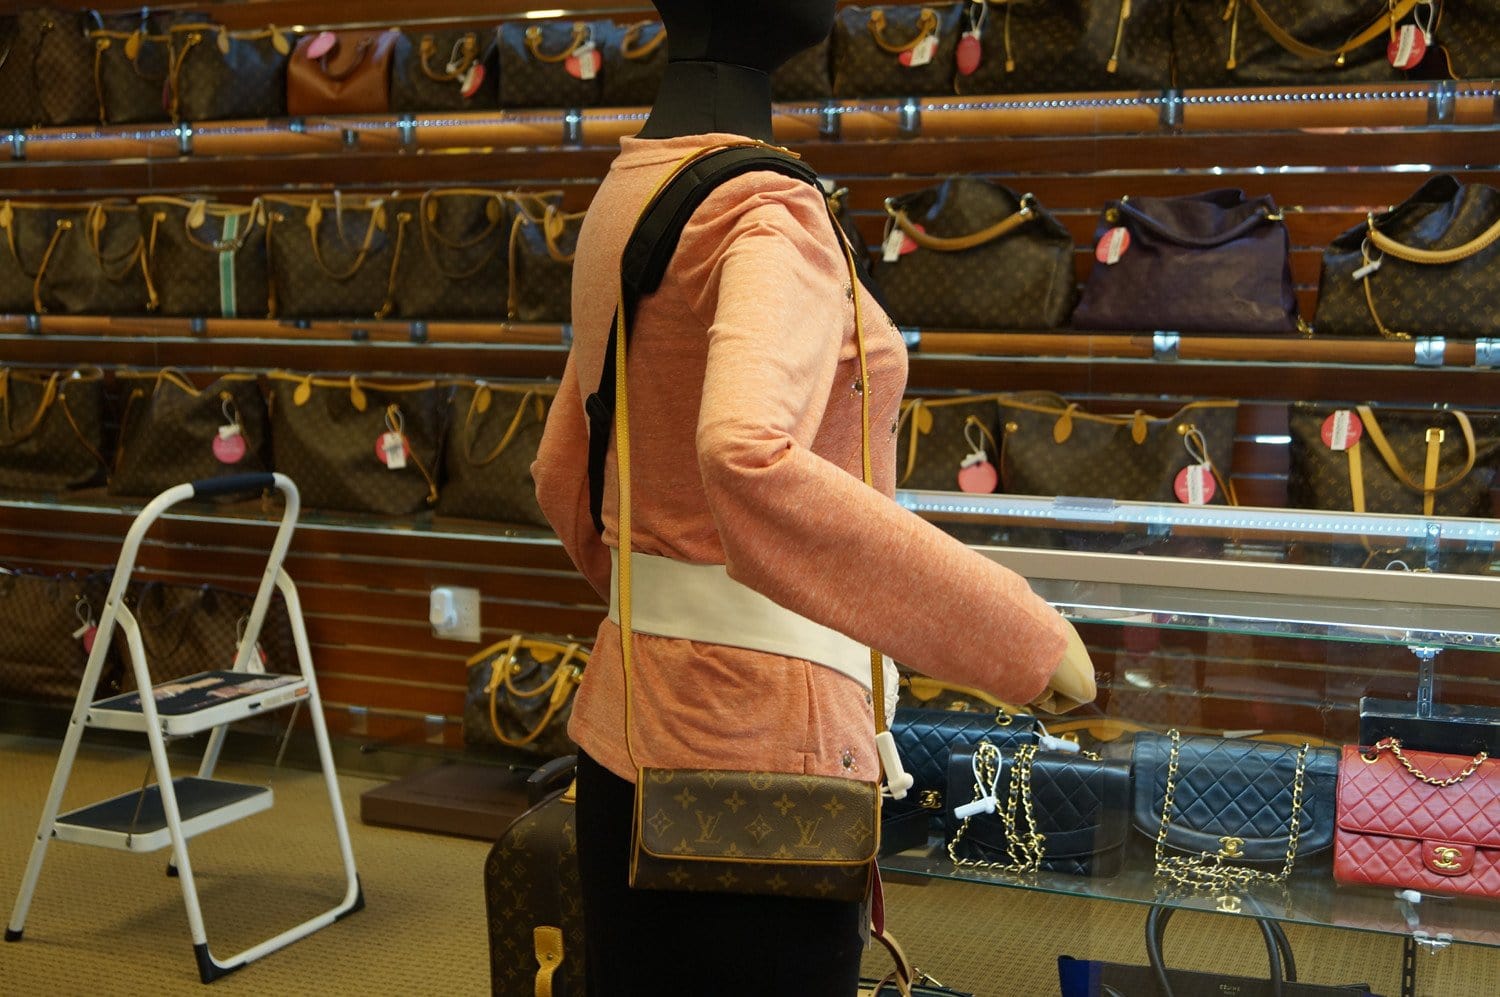 LOUIS VUITTON Monogram Twin PM Pochette Shoulder Handbag